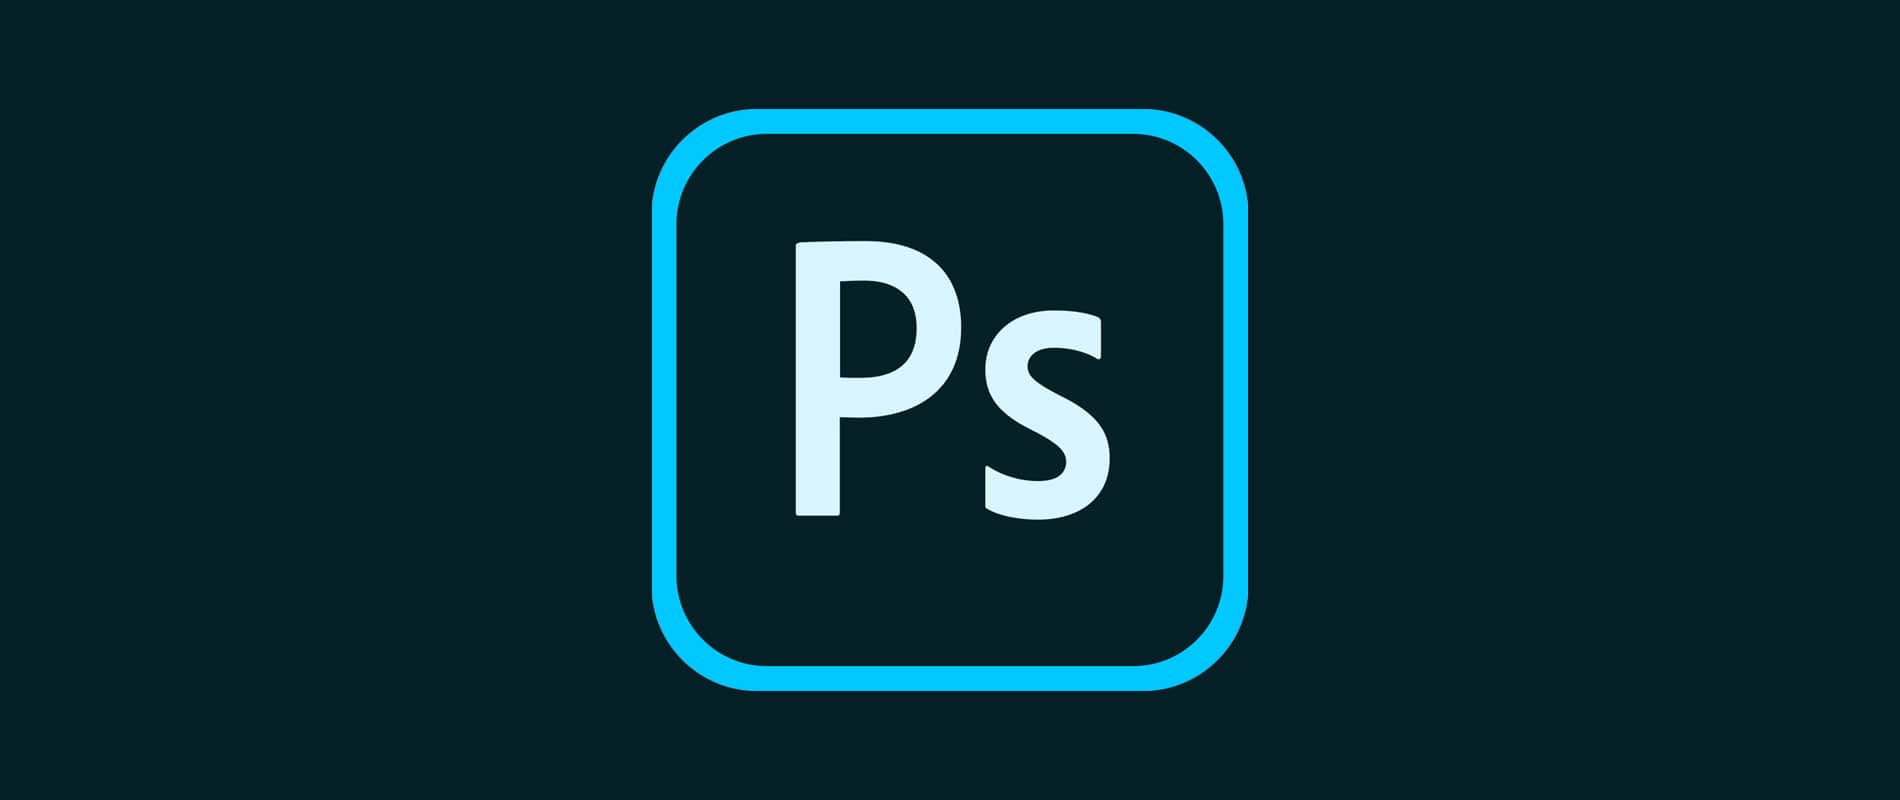 Adobe Photoshop CC 2019: Undo Shortcut & Transform Fixes